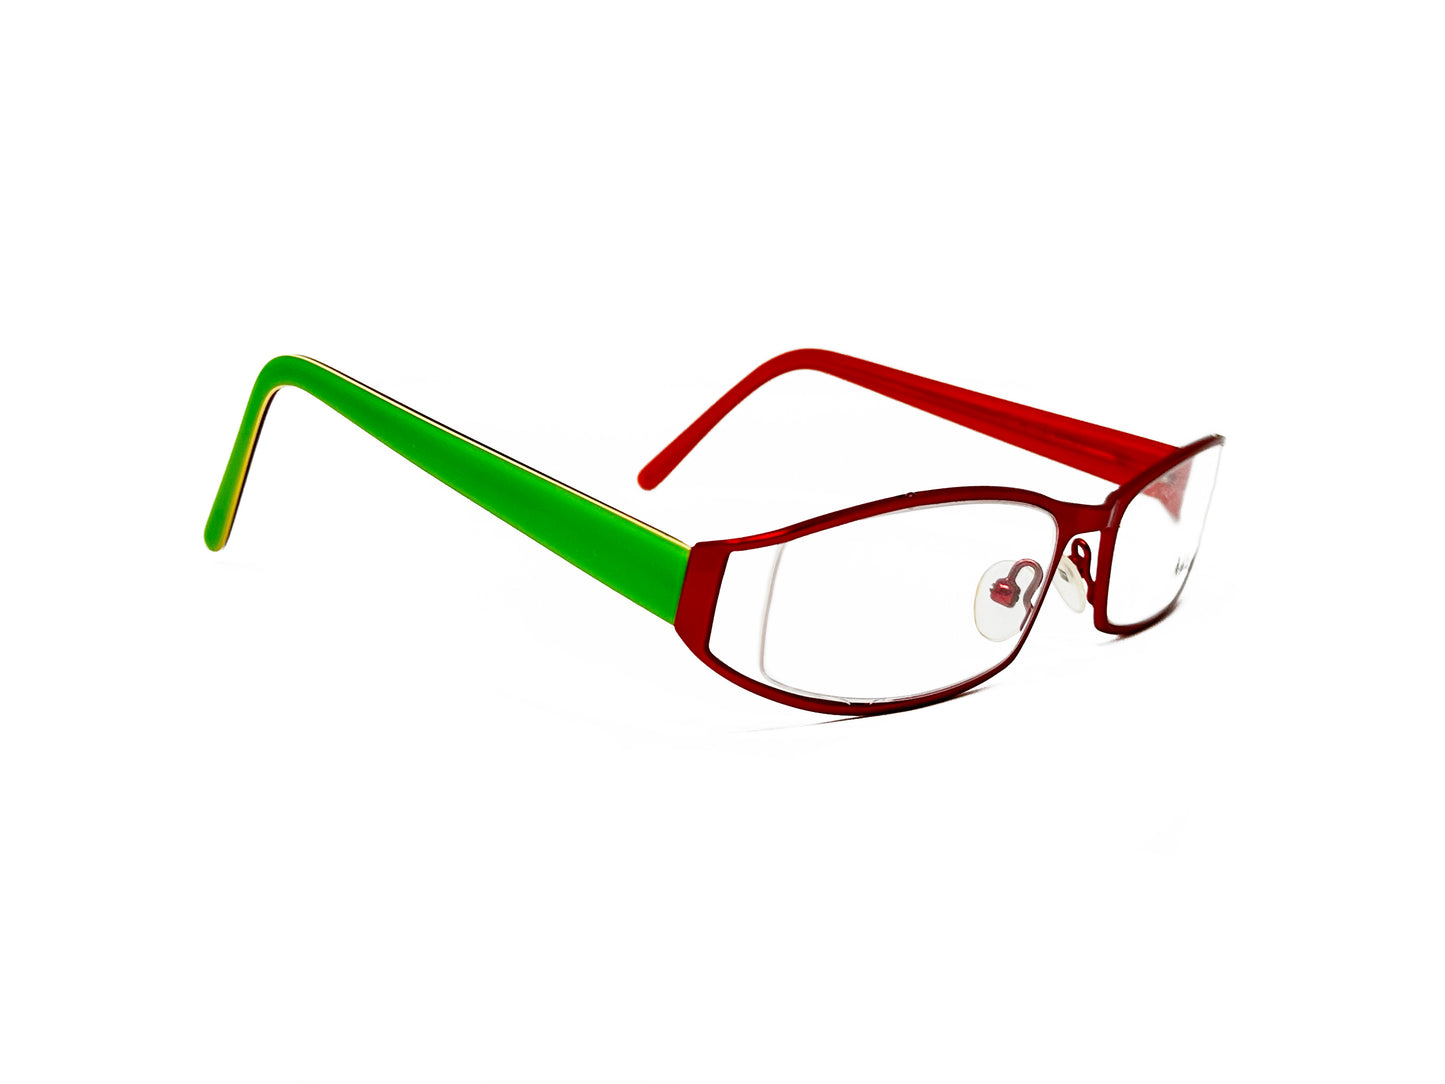 Imago curved-rectangular, metal optical frames with gap between side of lens and metal frame. Model: Varne. Color: 4 - red. Side view.